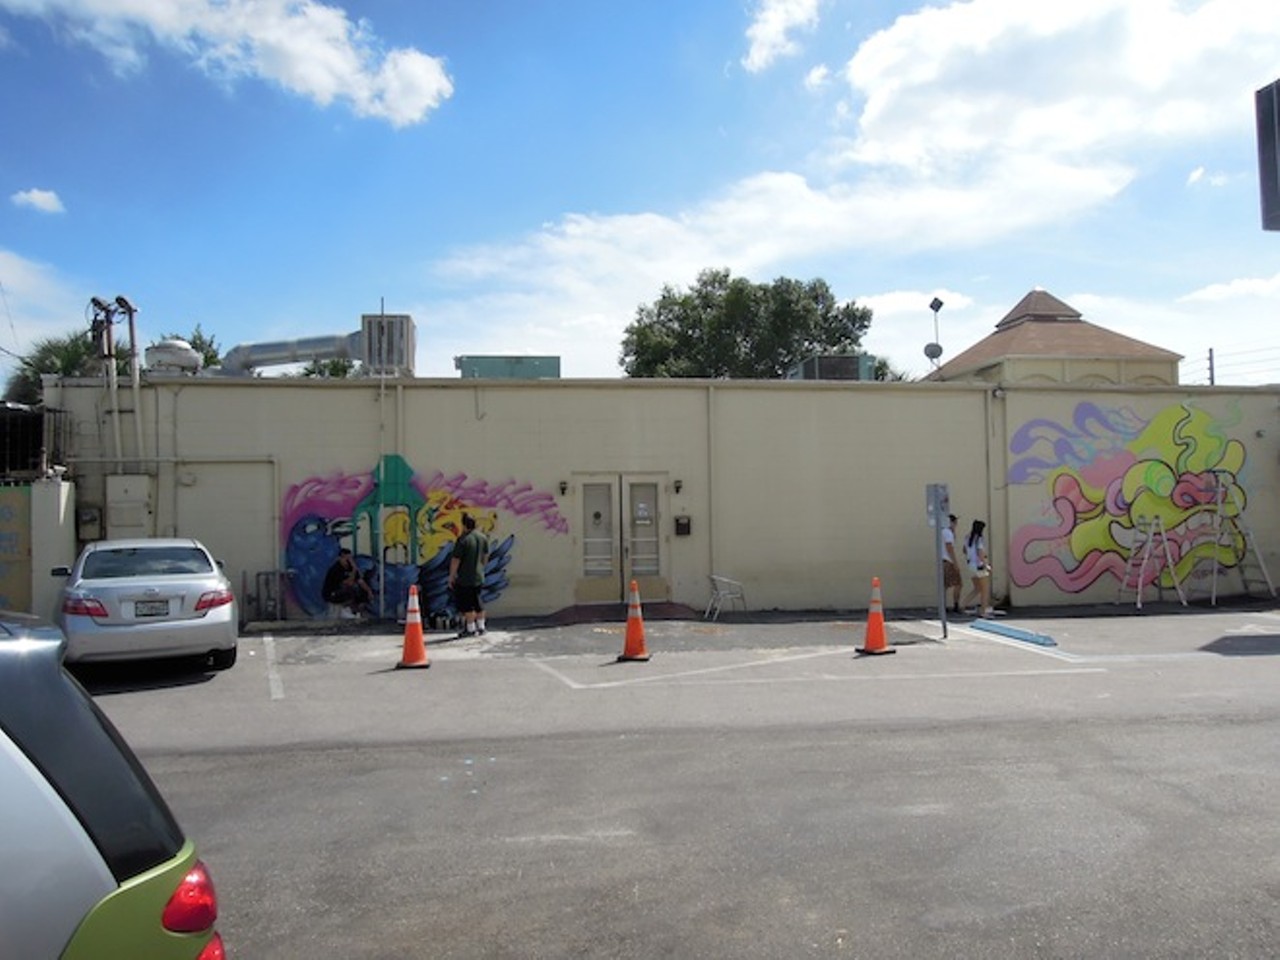 30 vivid shots of Orlando graffiti in progress